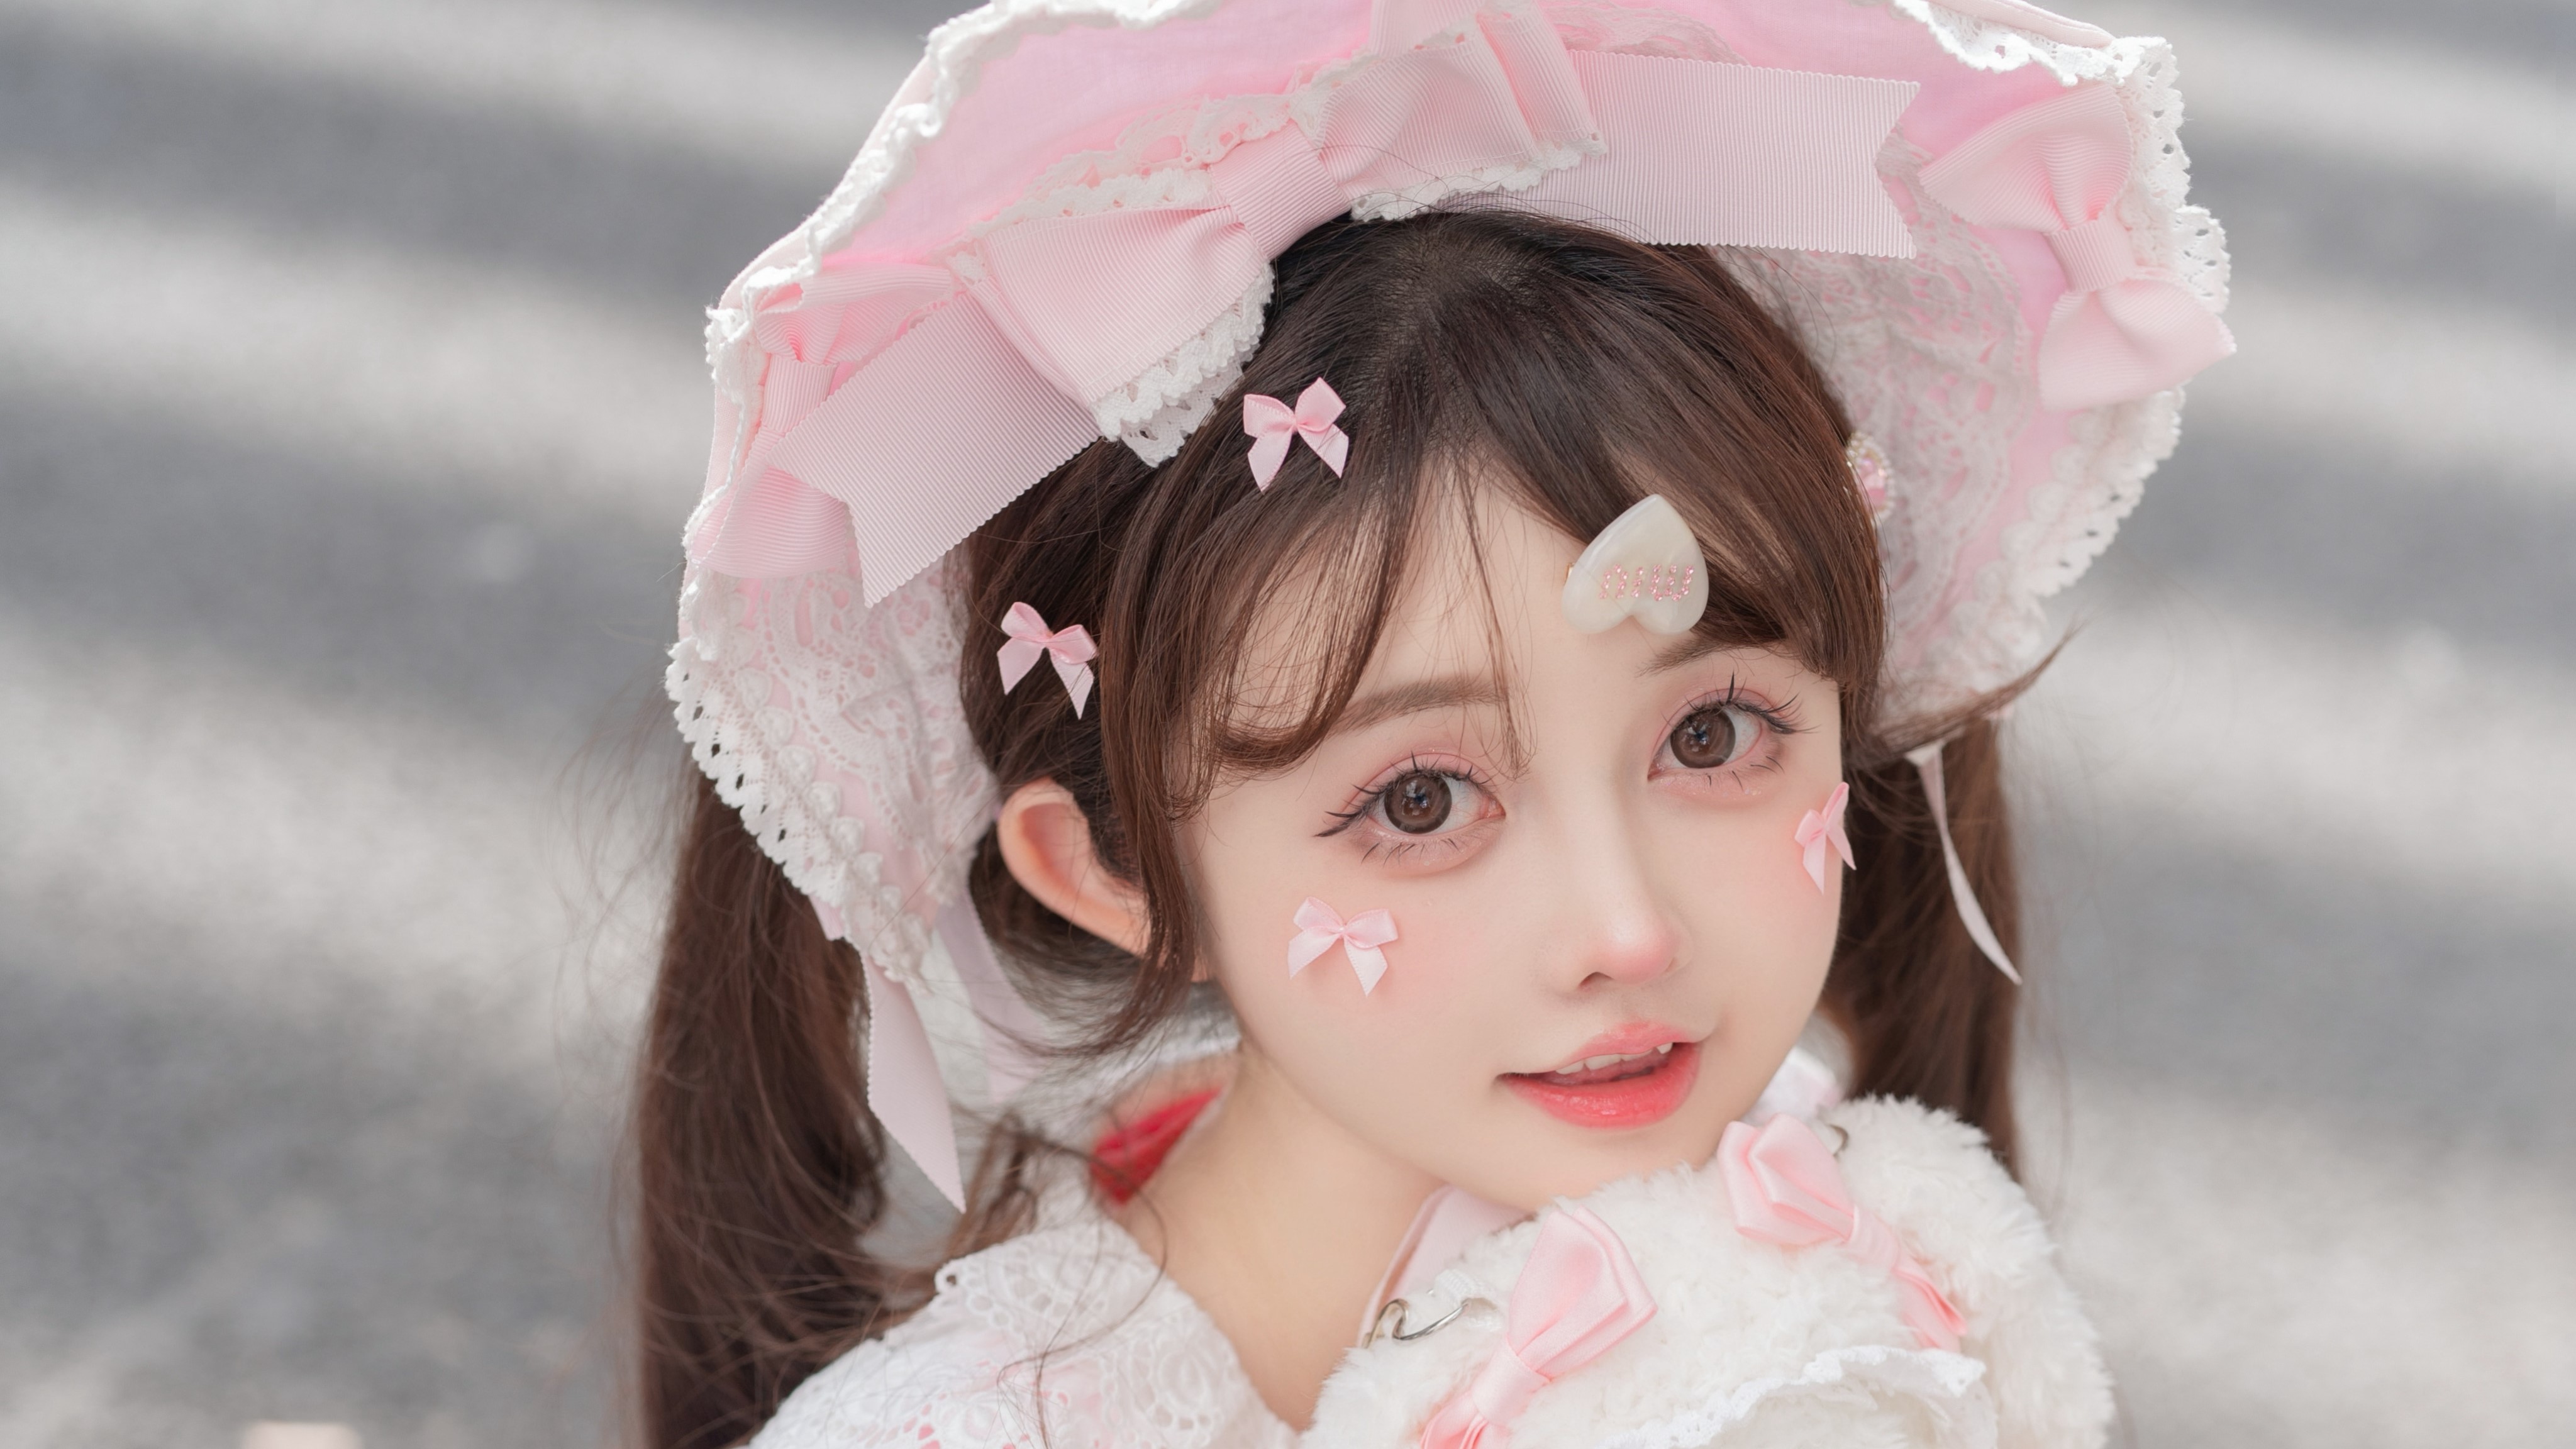 People 4096x2304 Asian pink hat white dress